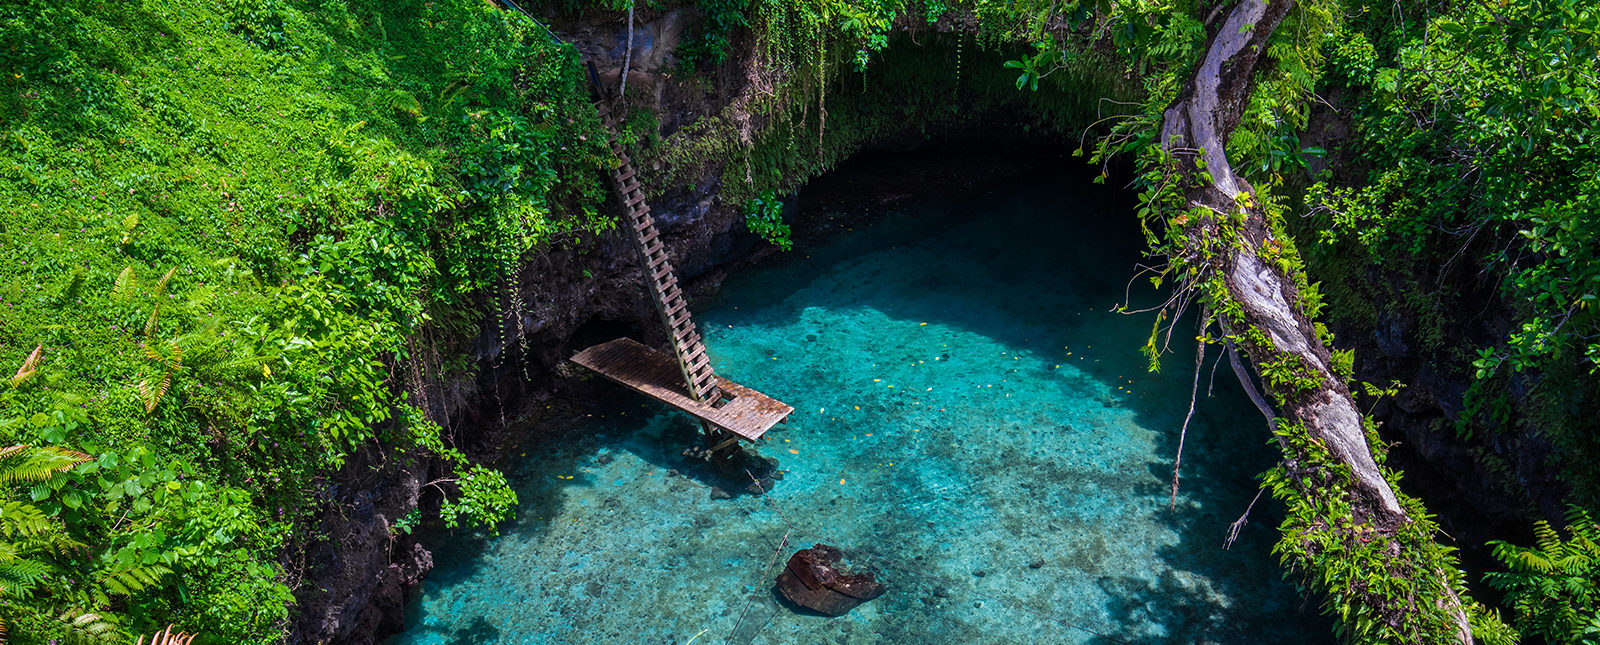 Samoa Tourism Authority Case Study